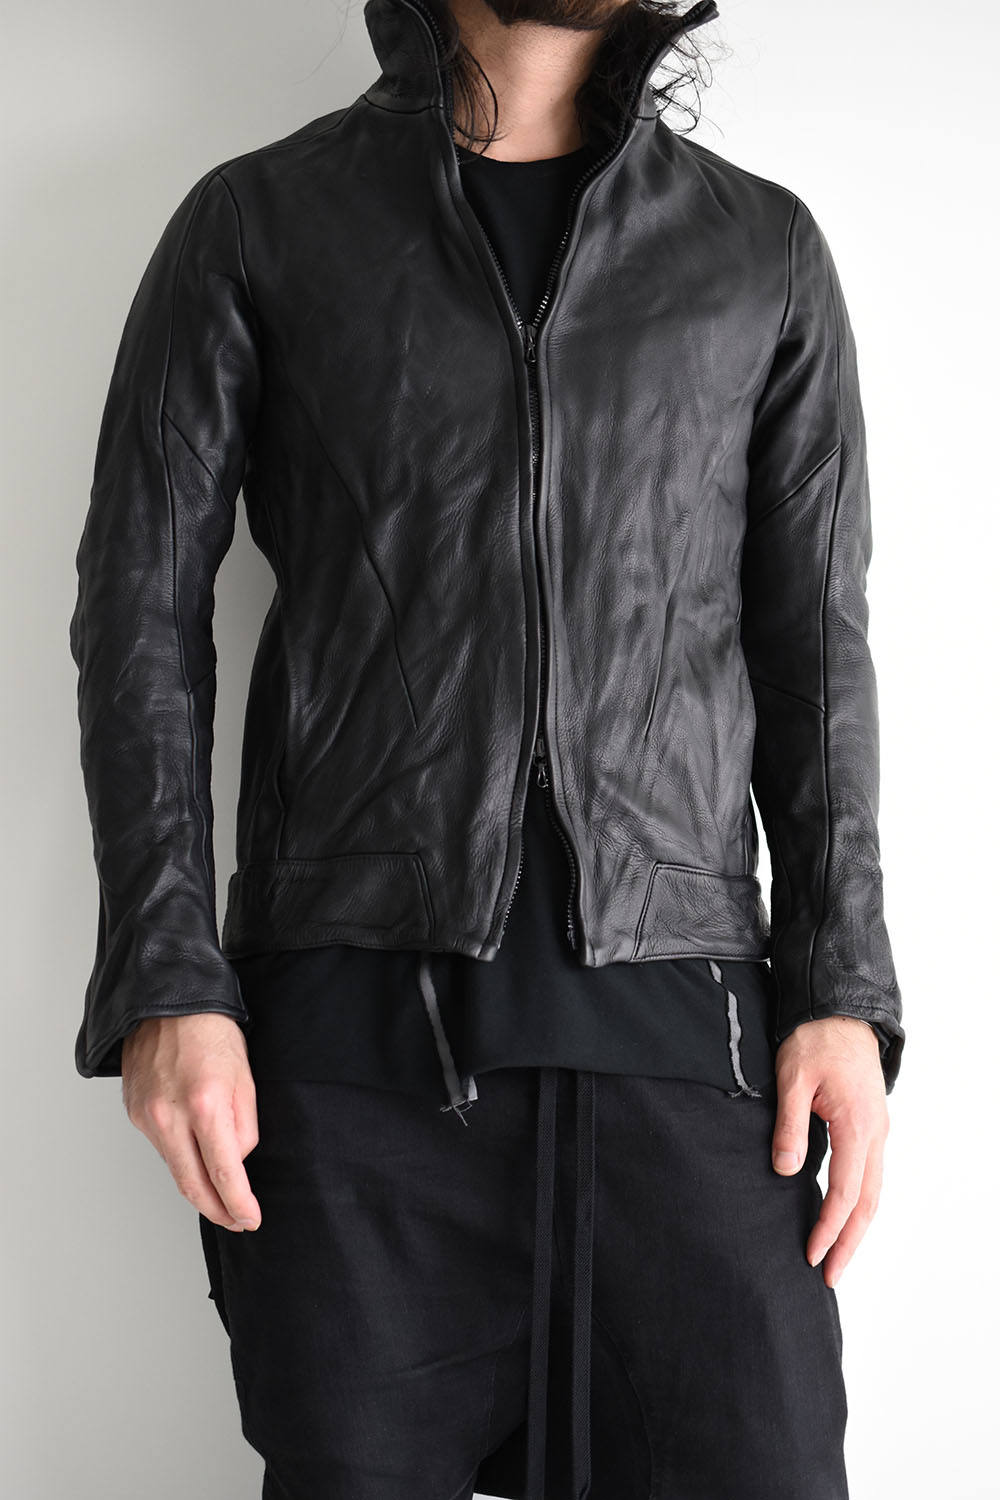 CIVILIZED シヴィライズド レザートラックジャケット 限定色グレーファッション